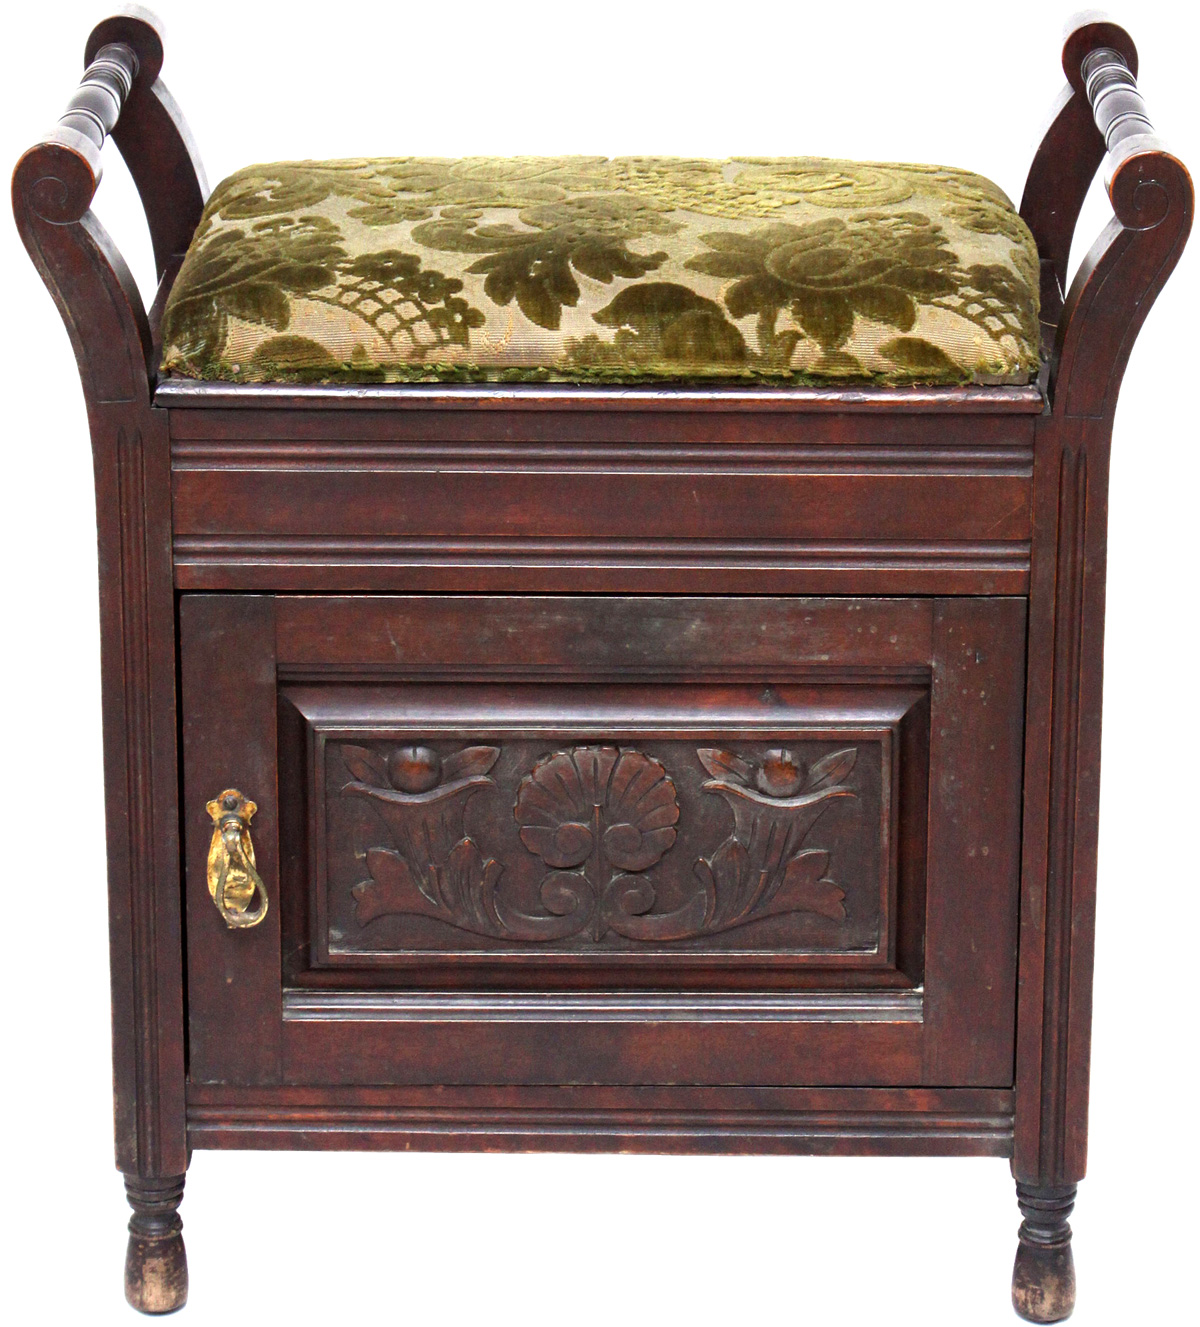 Antique Edwardian Piano Bench Cabinet - מושב פסנתר אנגלי עתיק - Back To List of Antique Furniture